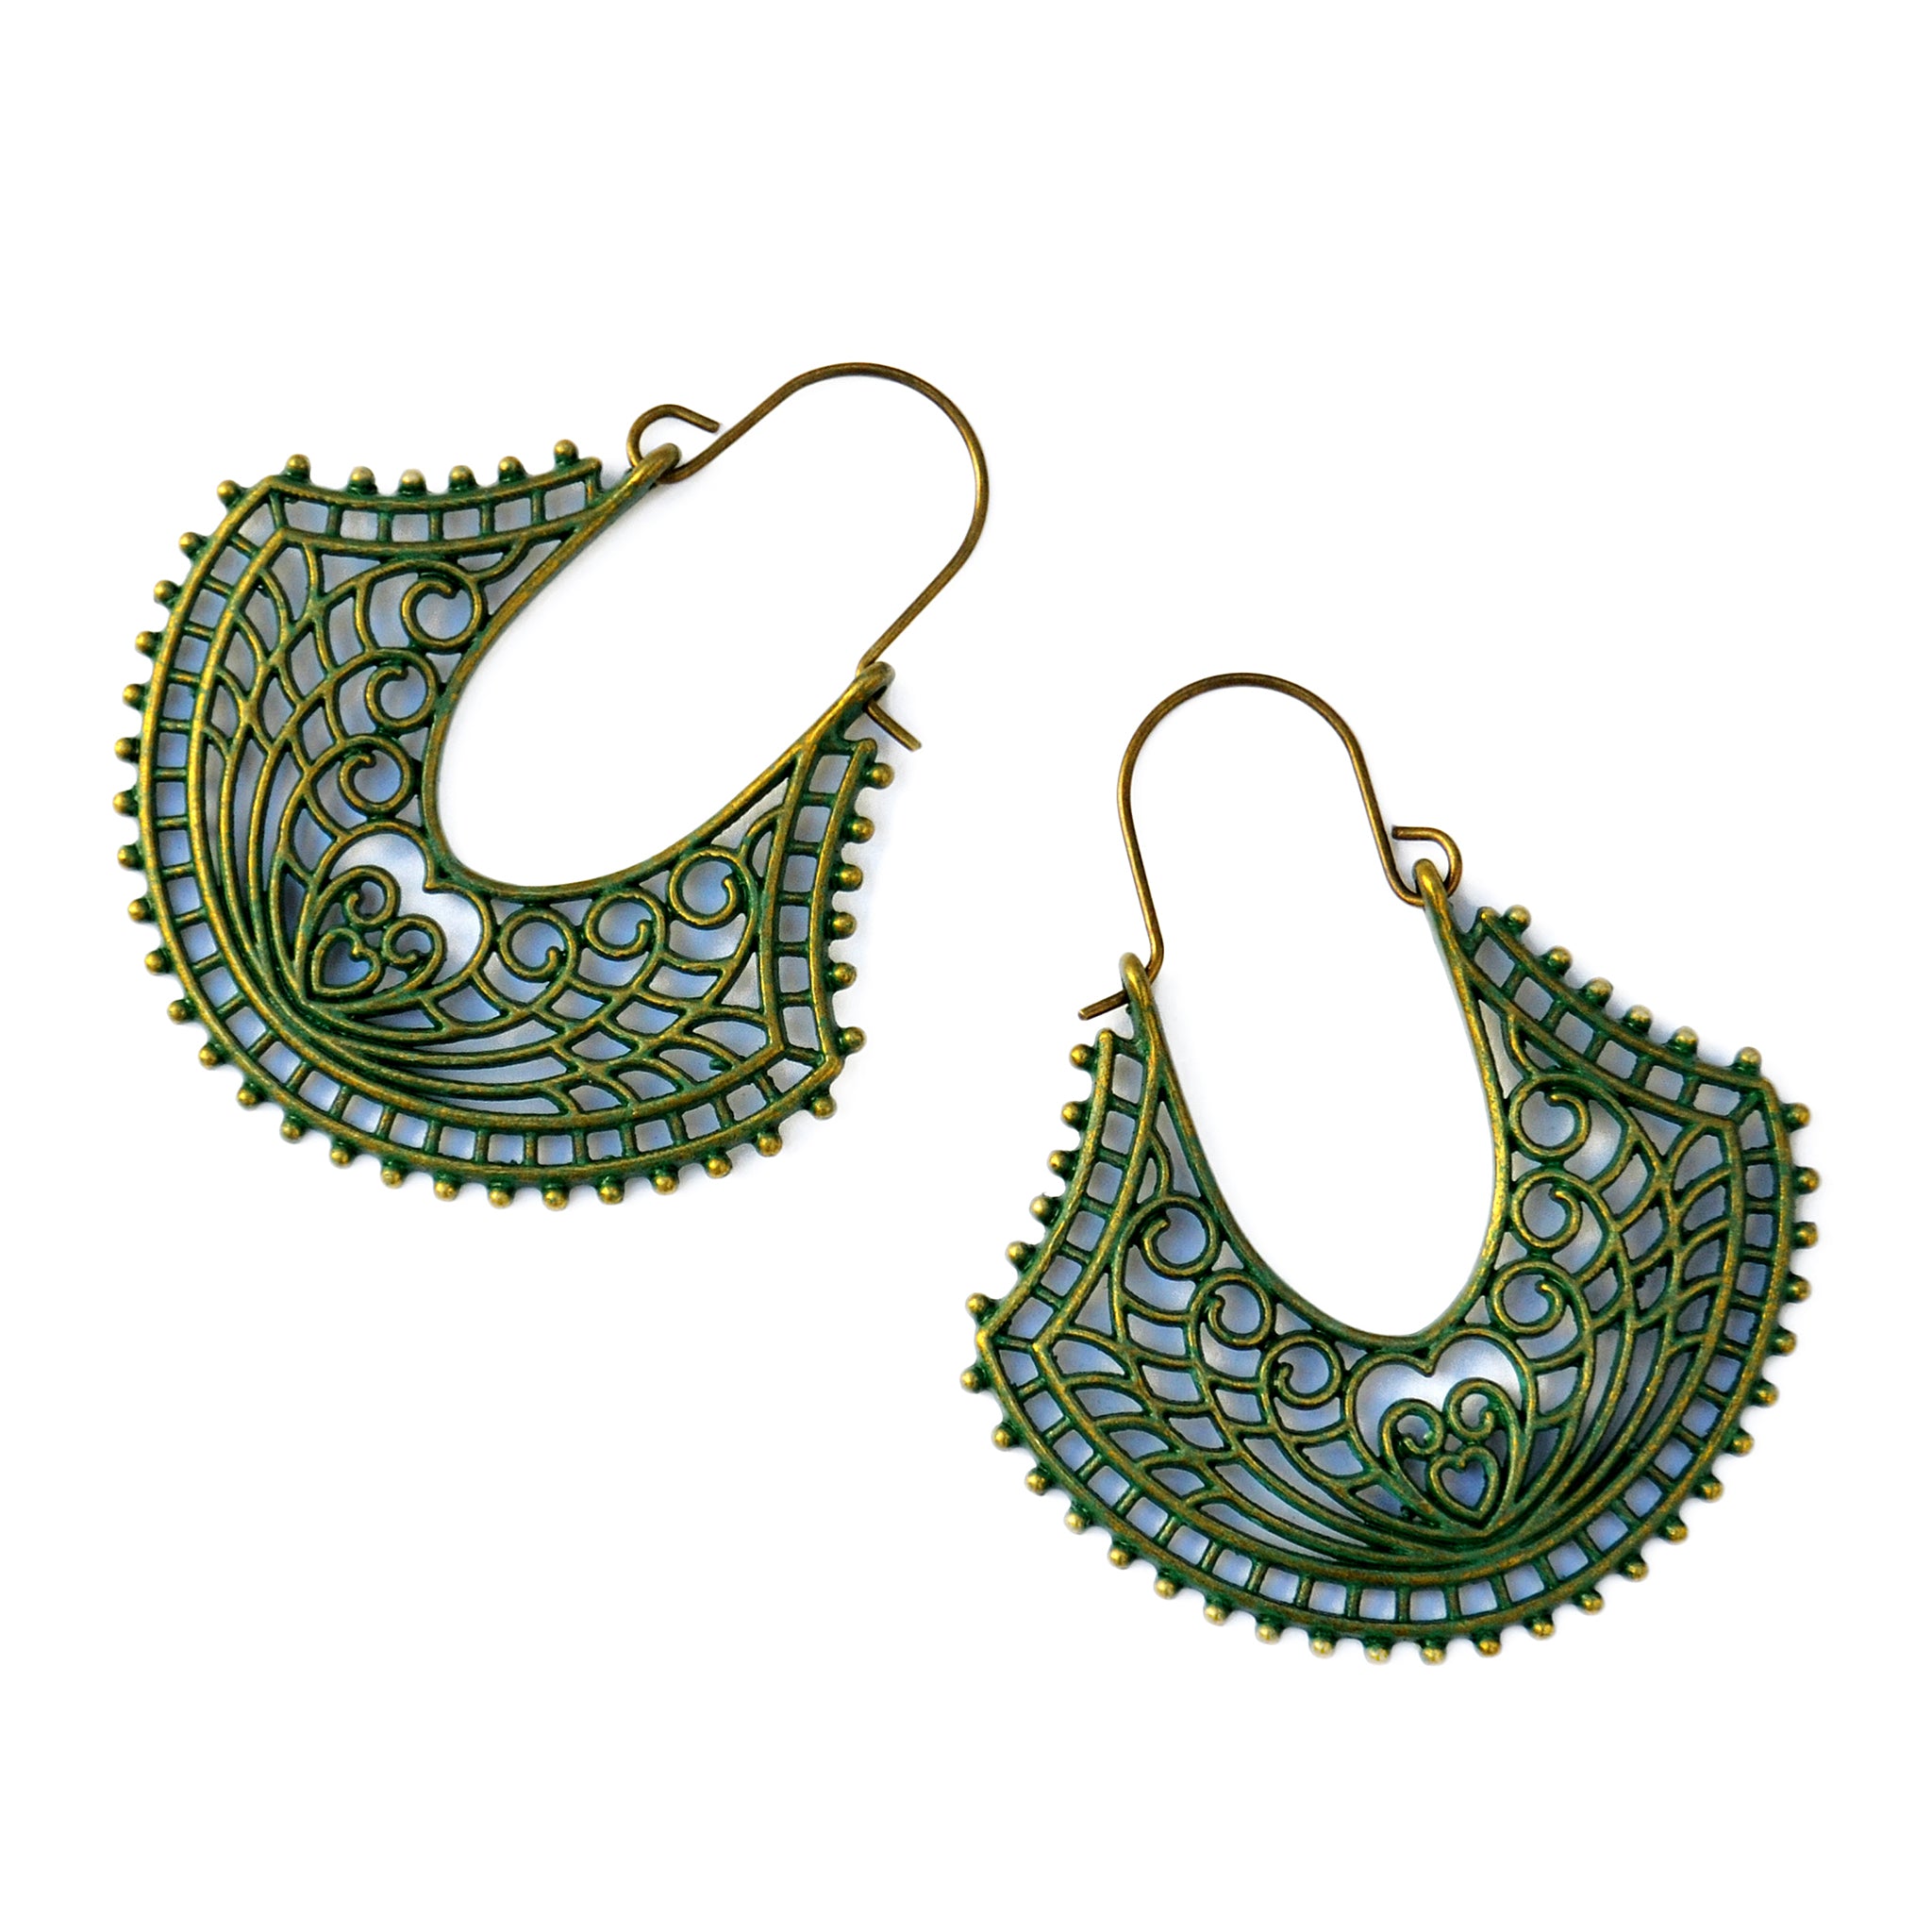 Green patina gypsy earrings